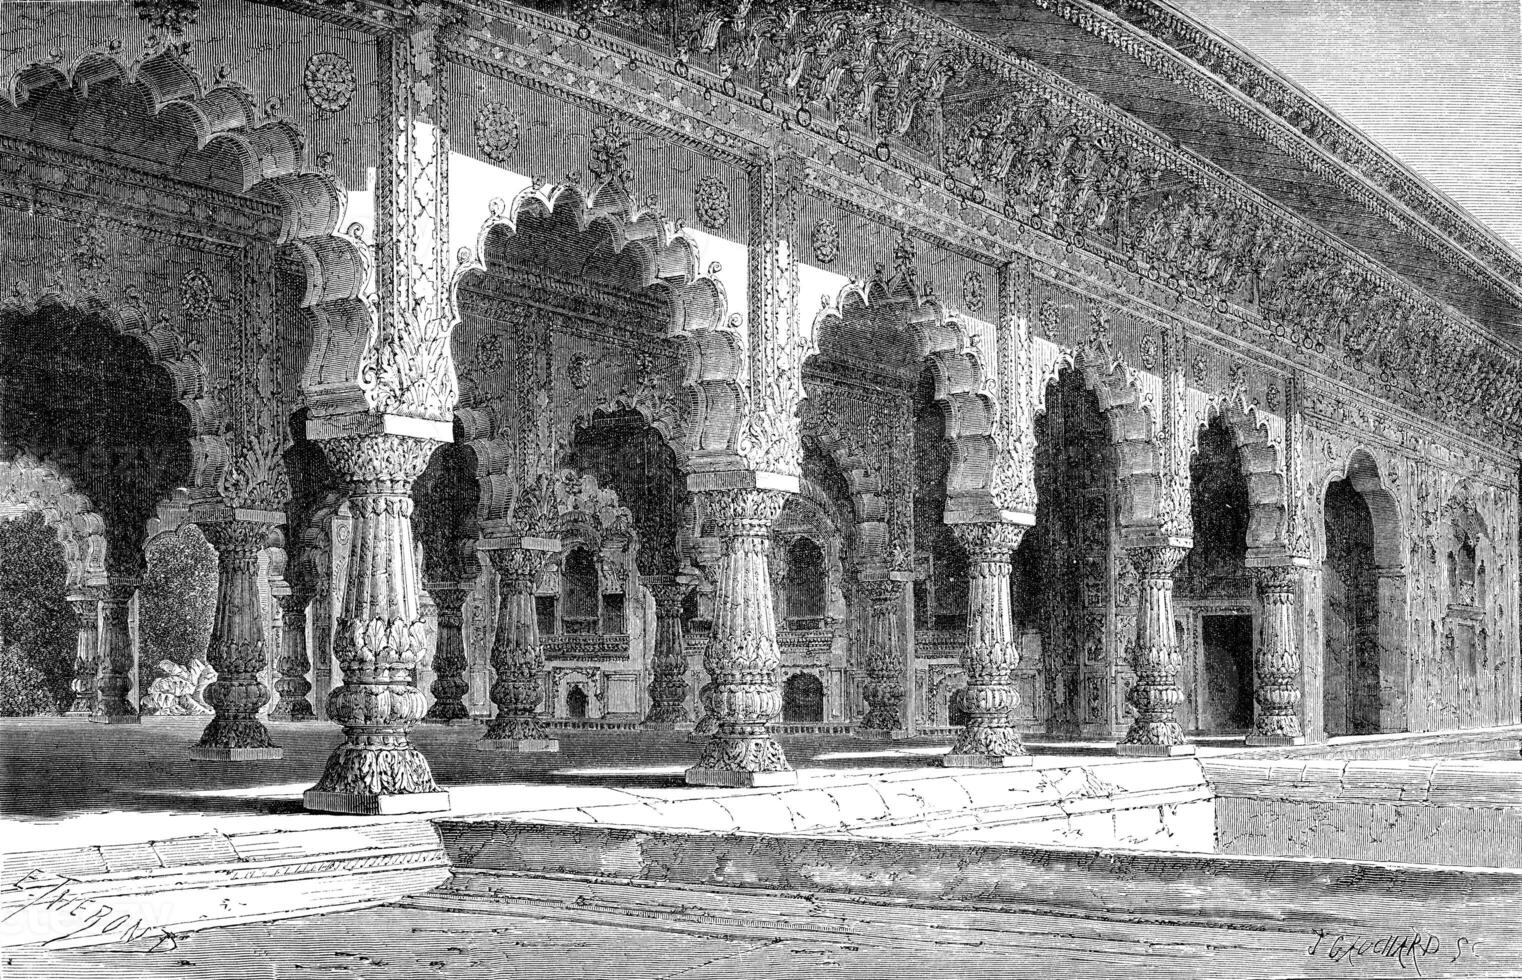 Pavilion Diwan I Khas at Digh, vintage engraving. photo